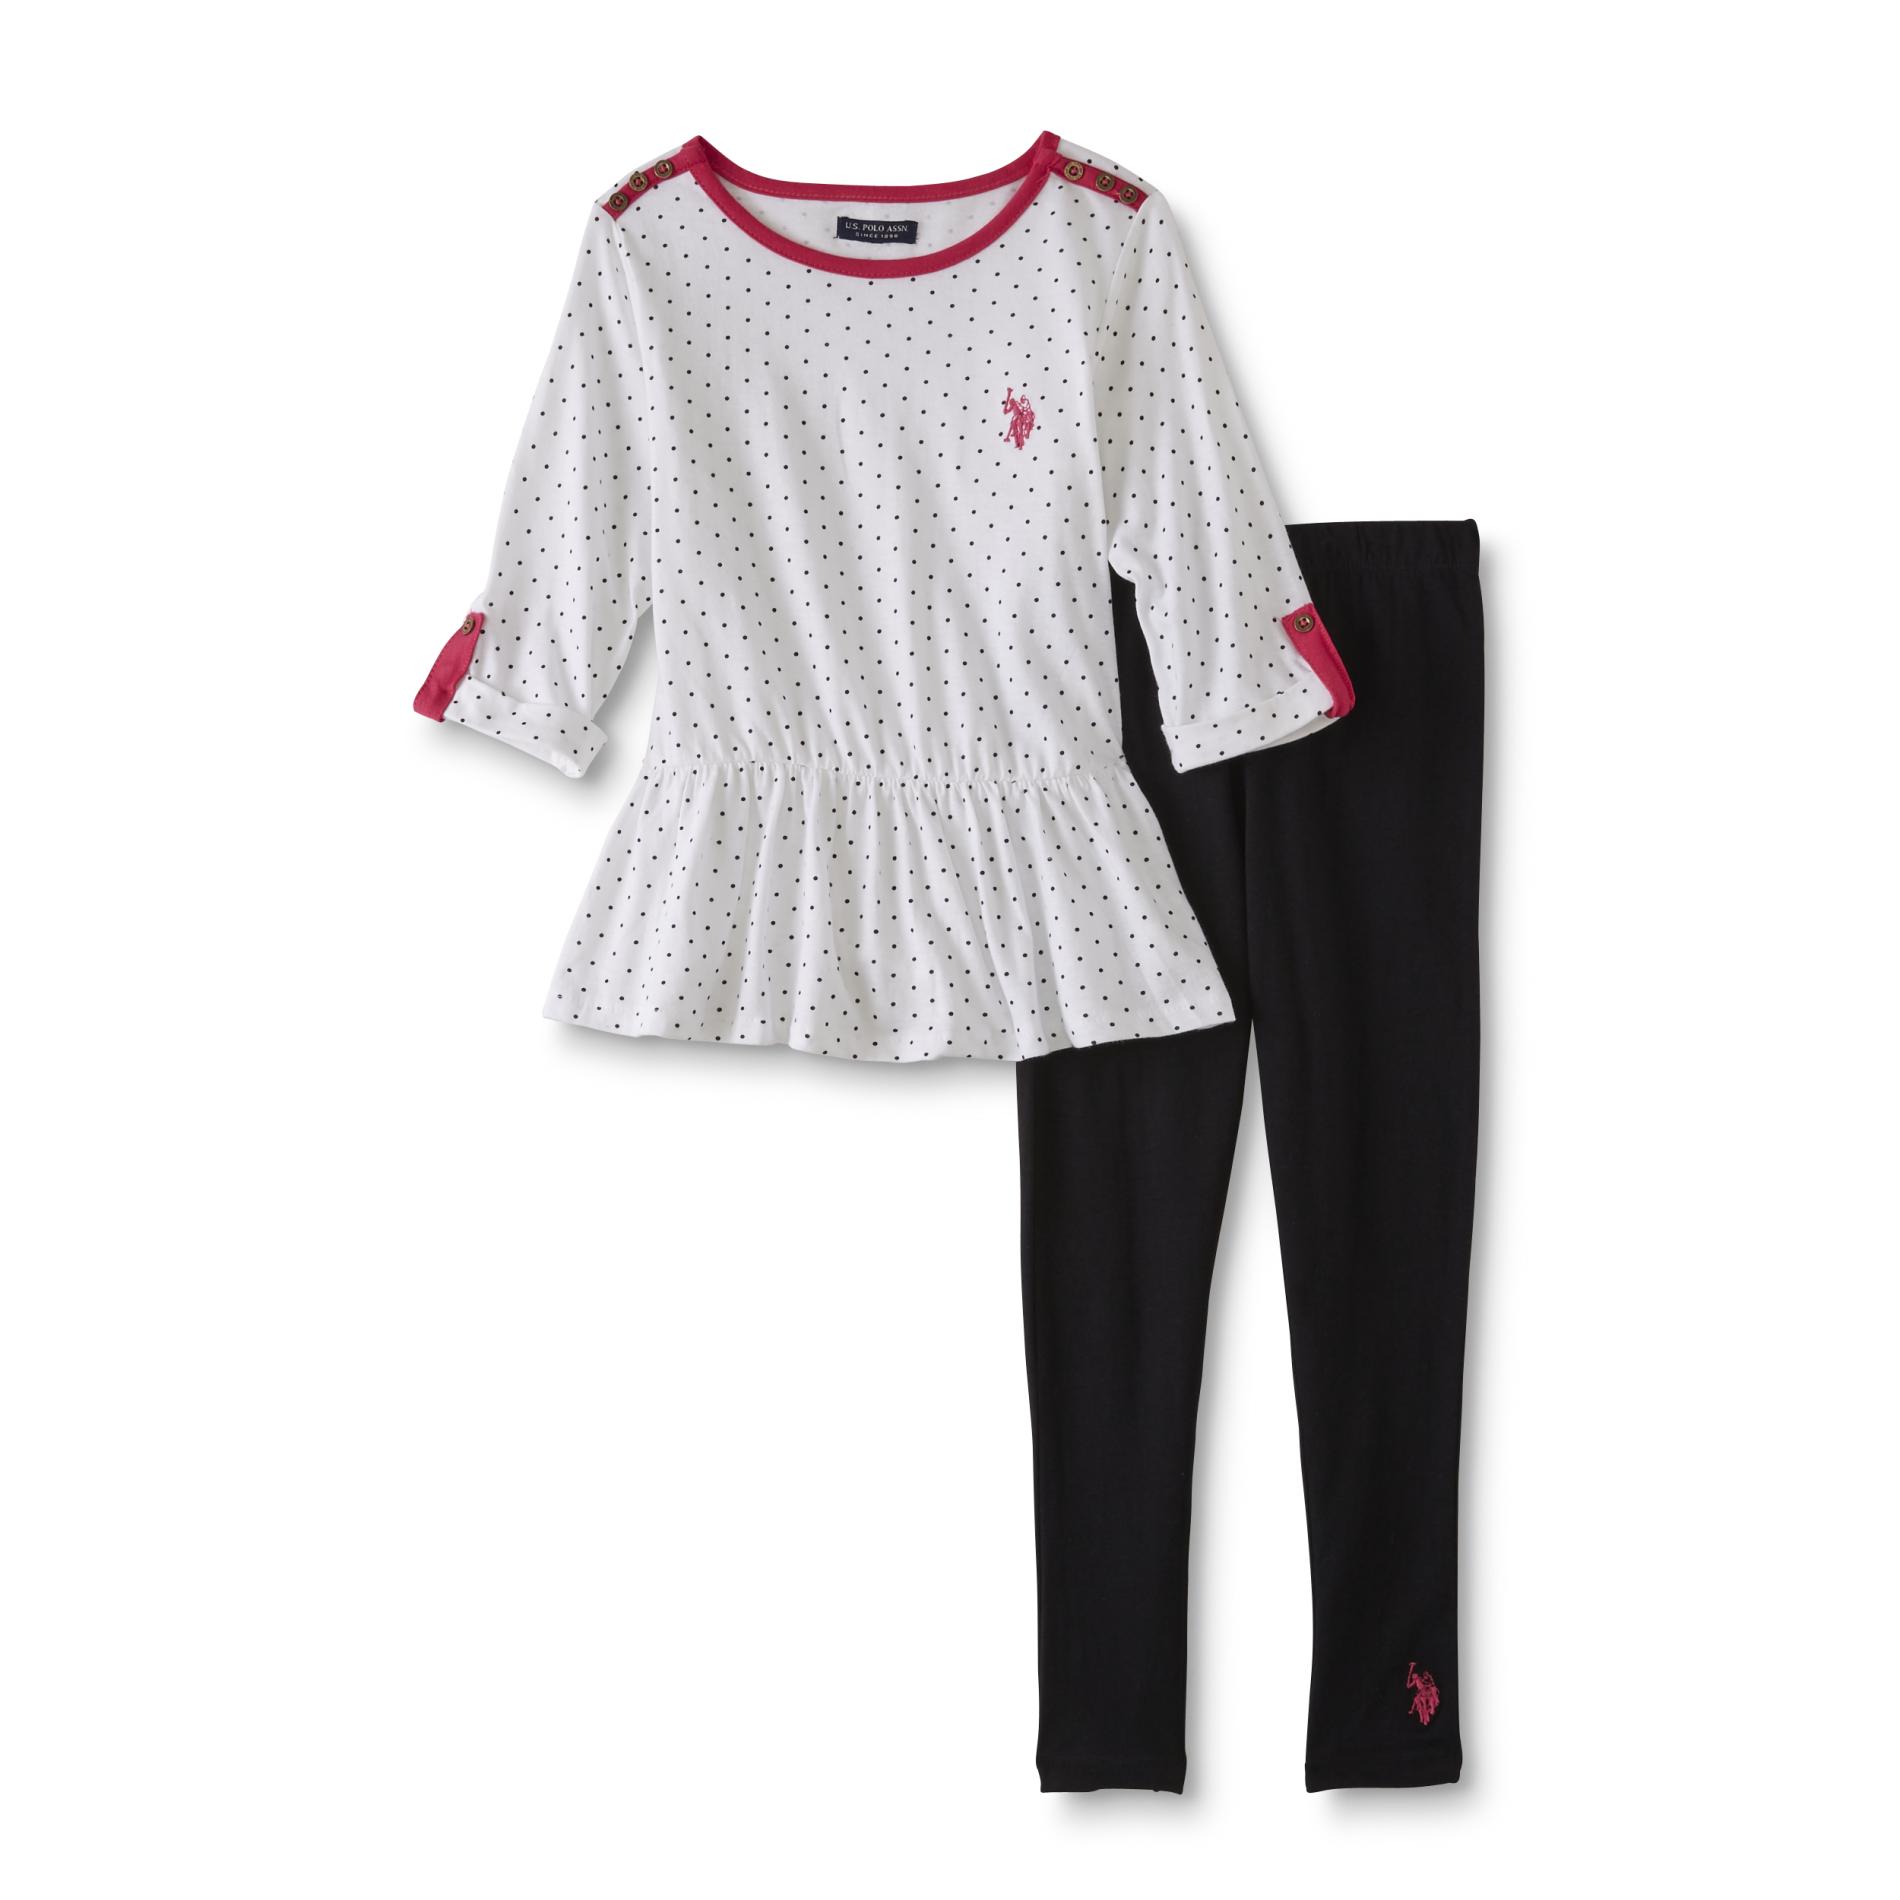 U.S. Polo Assn. Infant & Toddler Girls' Tunic Top & Leggings - Dots